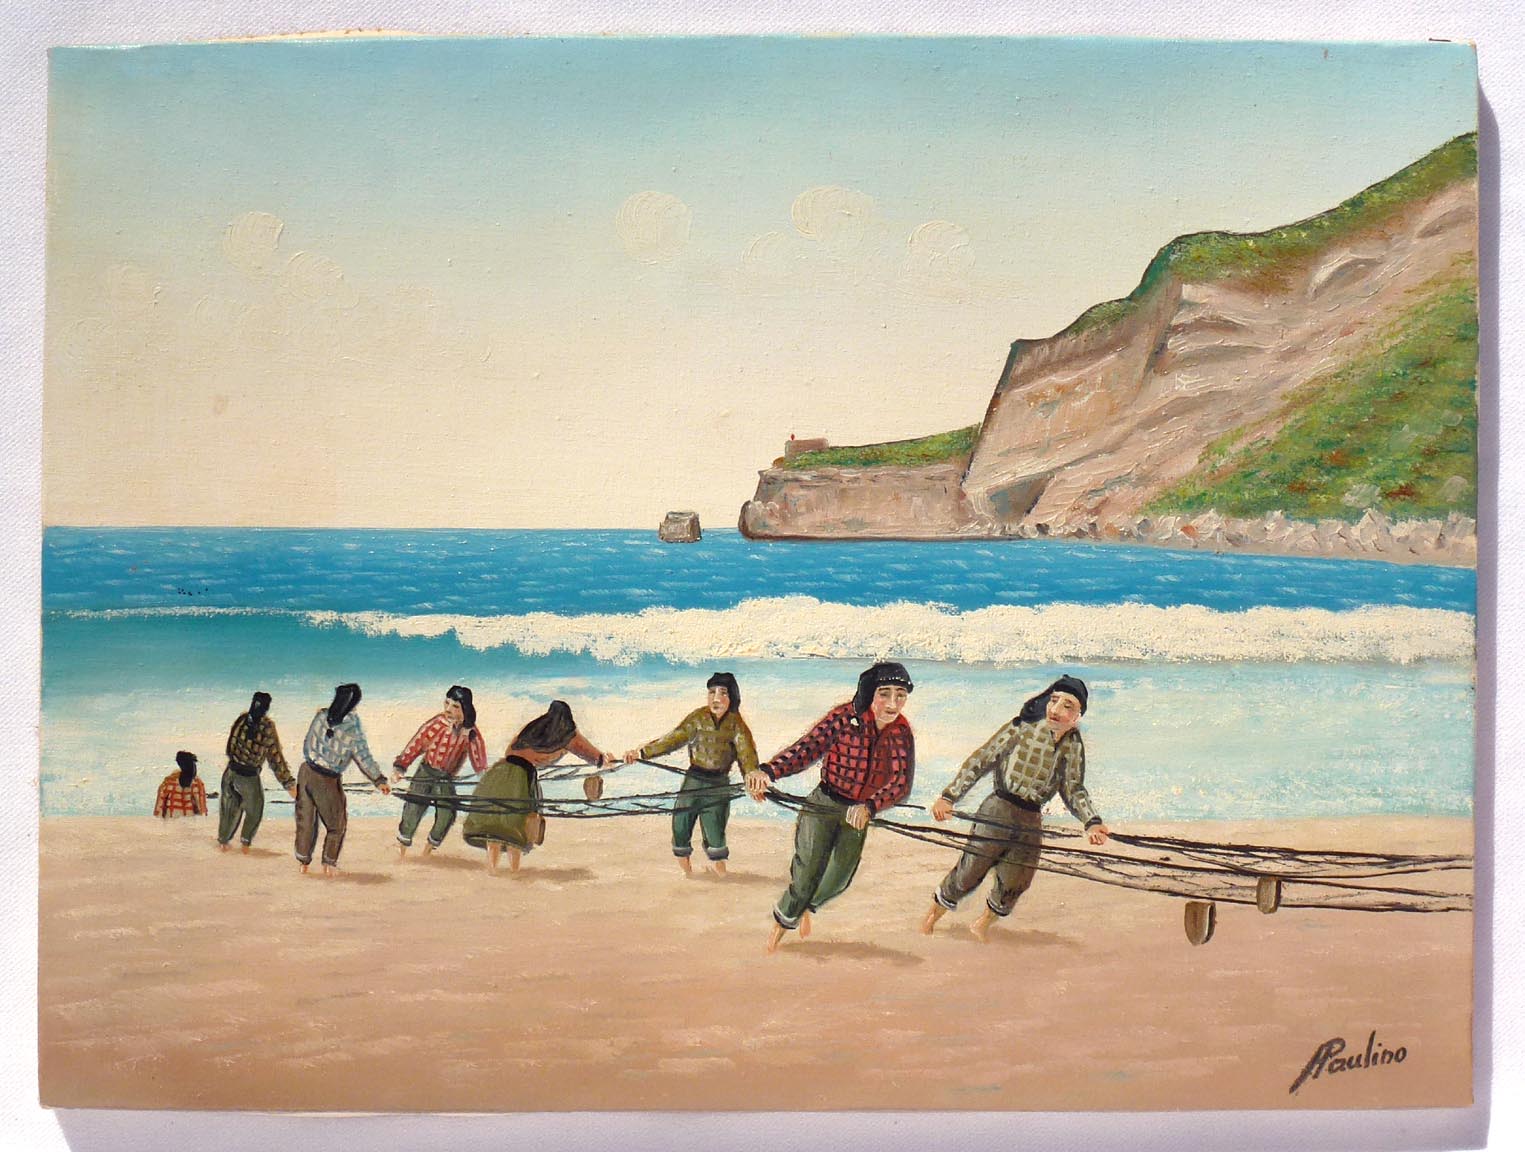 Portuguese fisherman painting